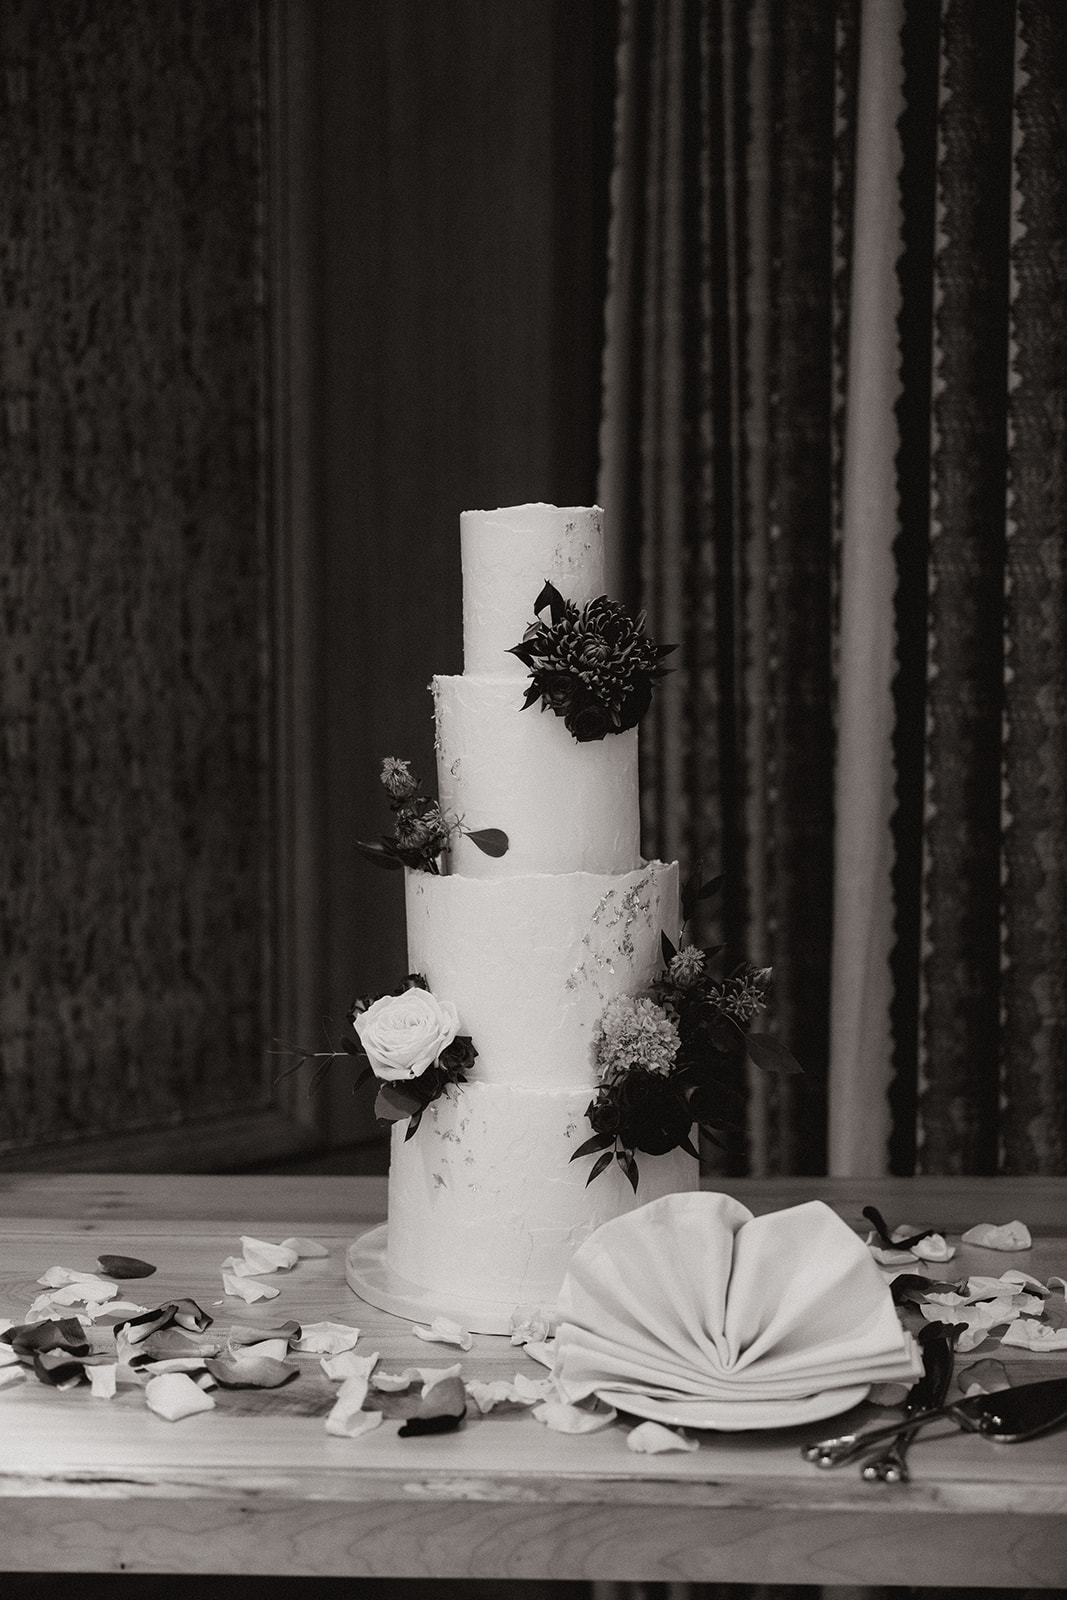 Wedding cake sits ready for slicing during an Arizona wedding reception